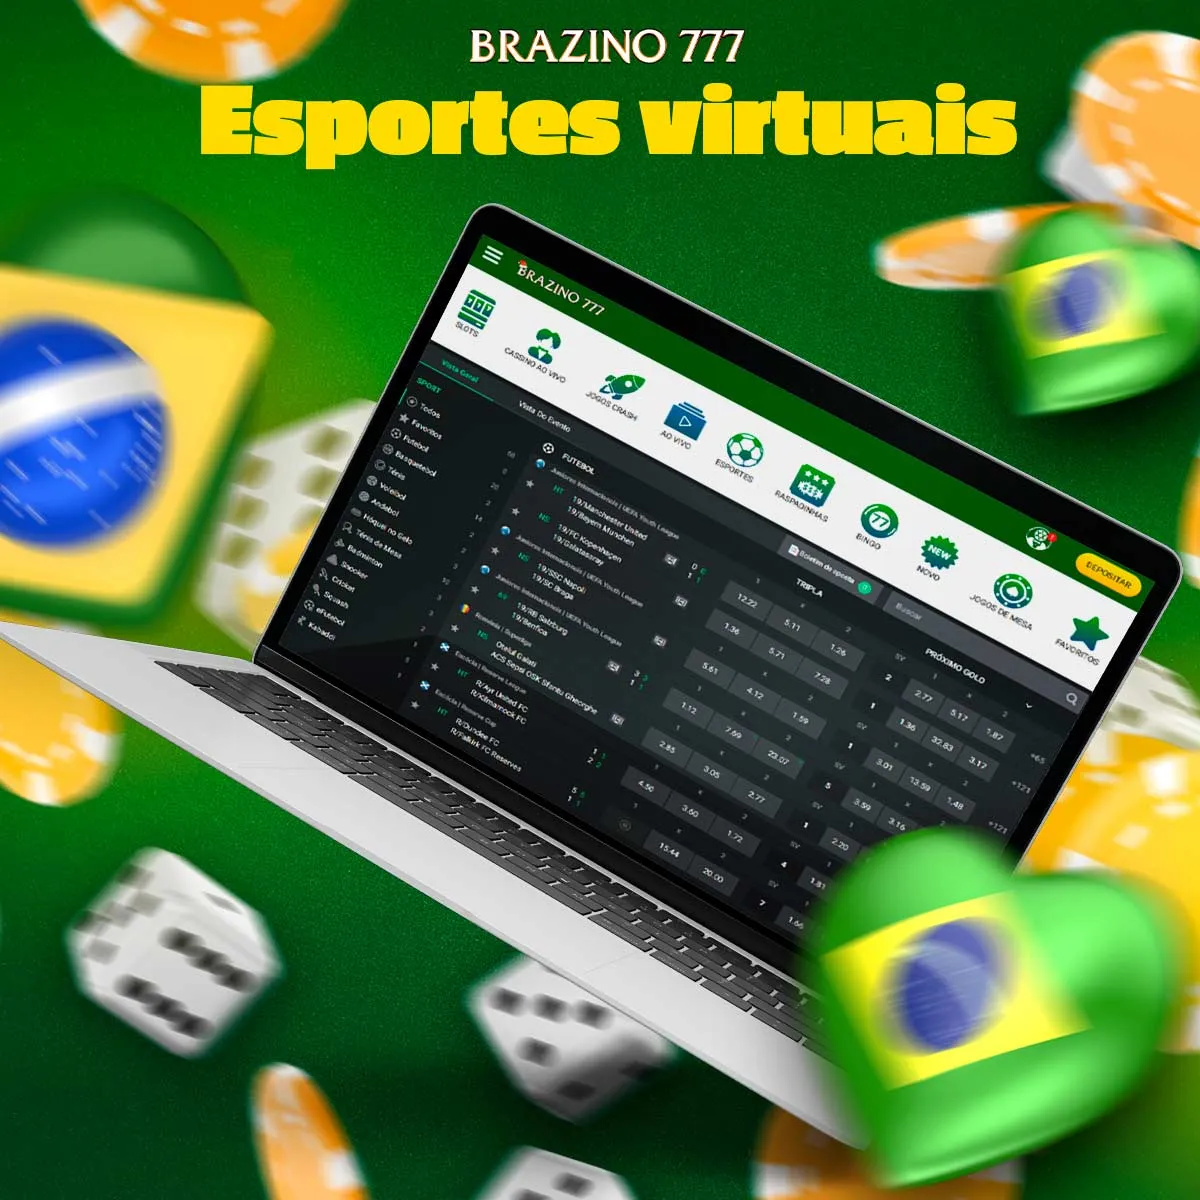 esportes virtuais Brazino777